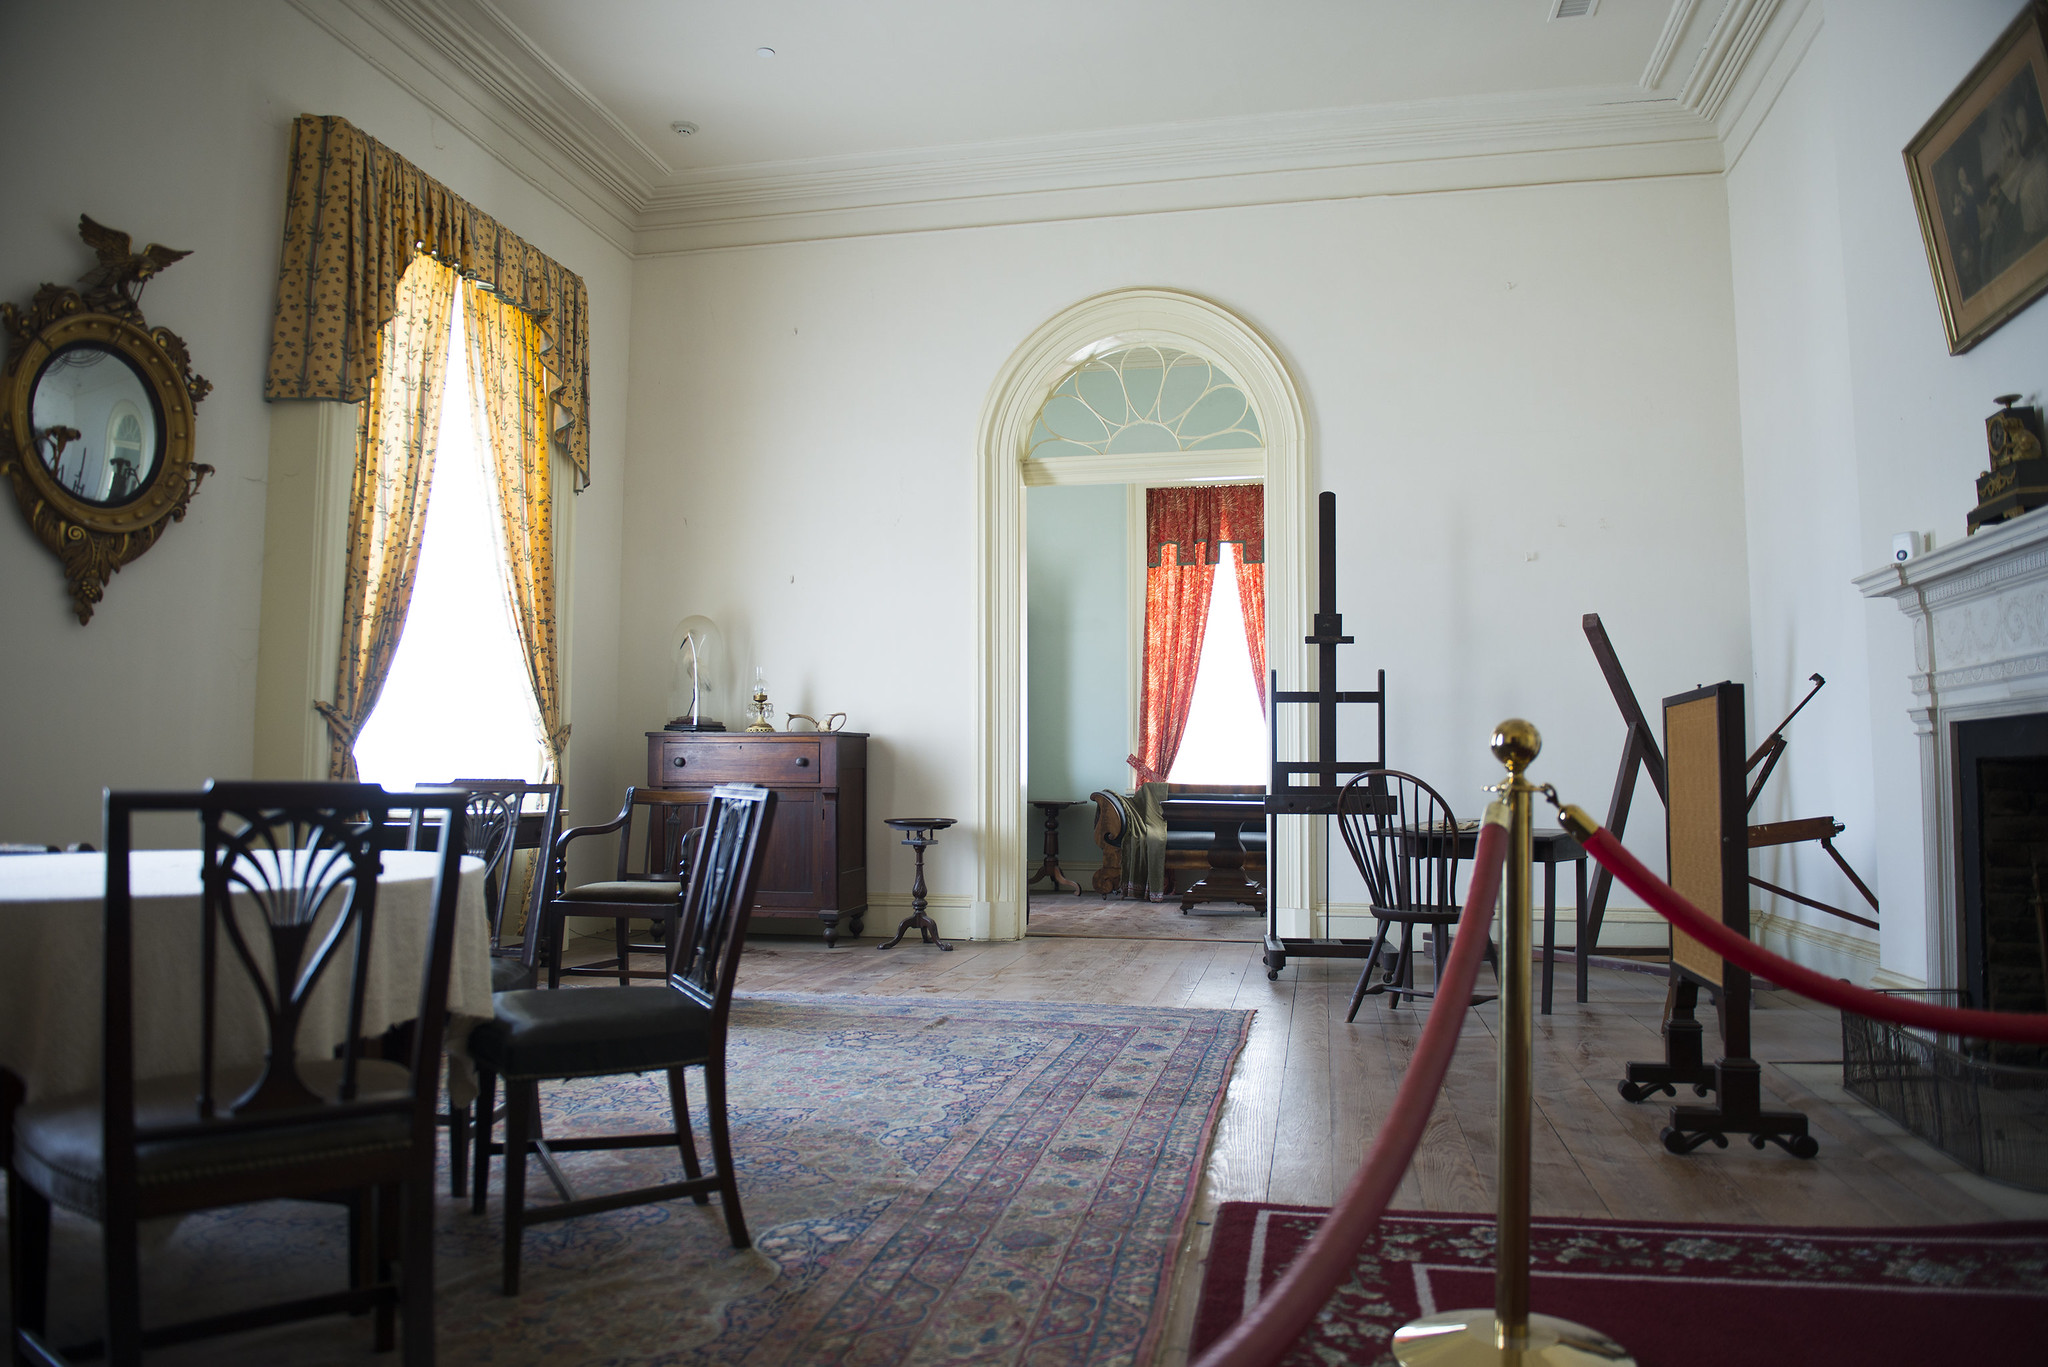 Interior of Arlington House, featuring historic furnishings